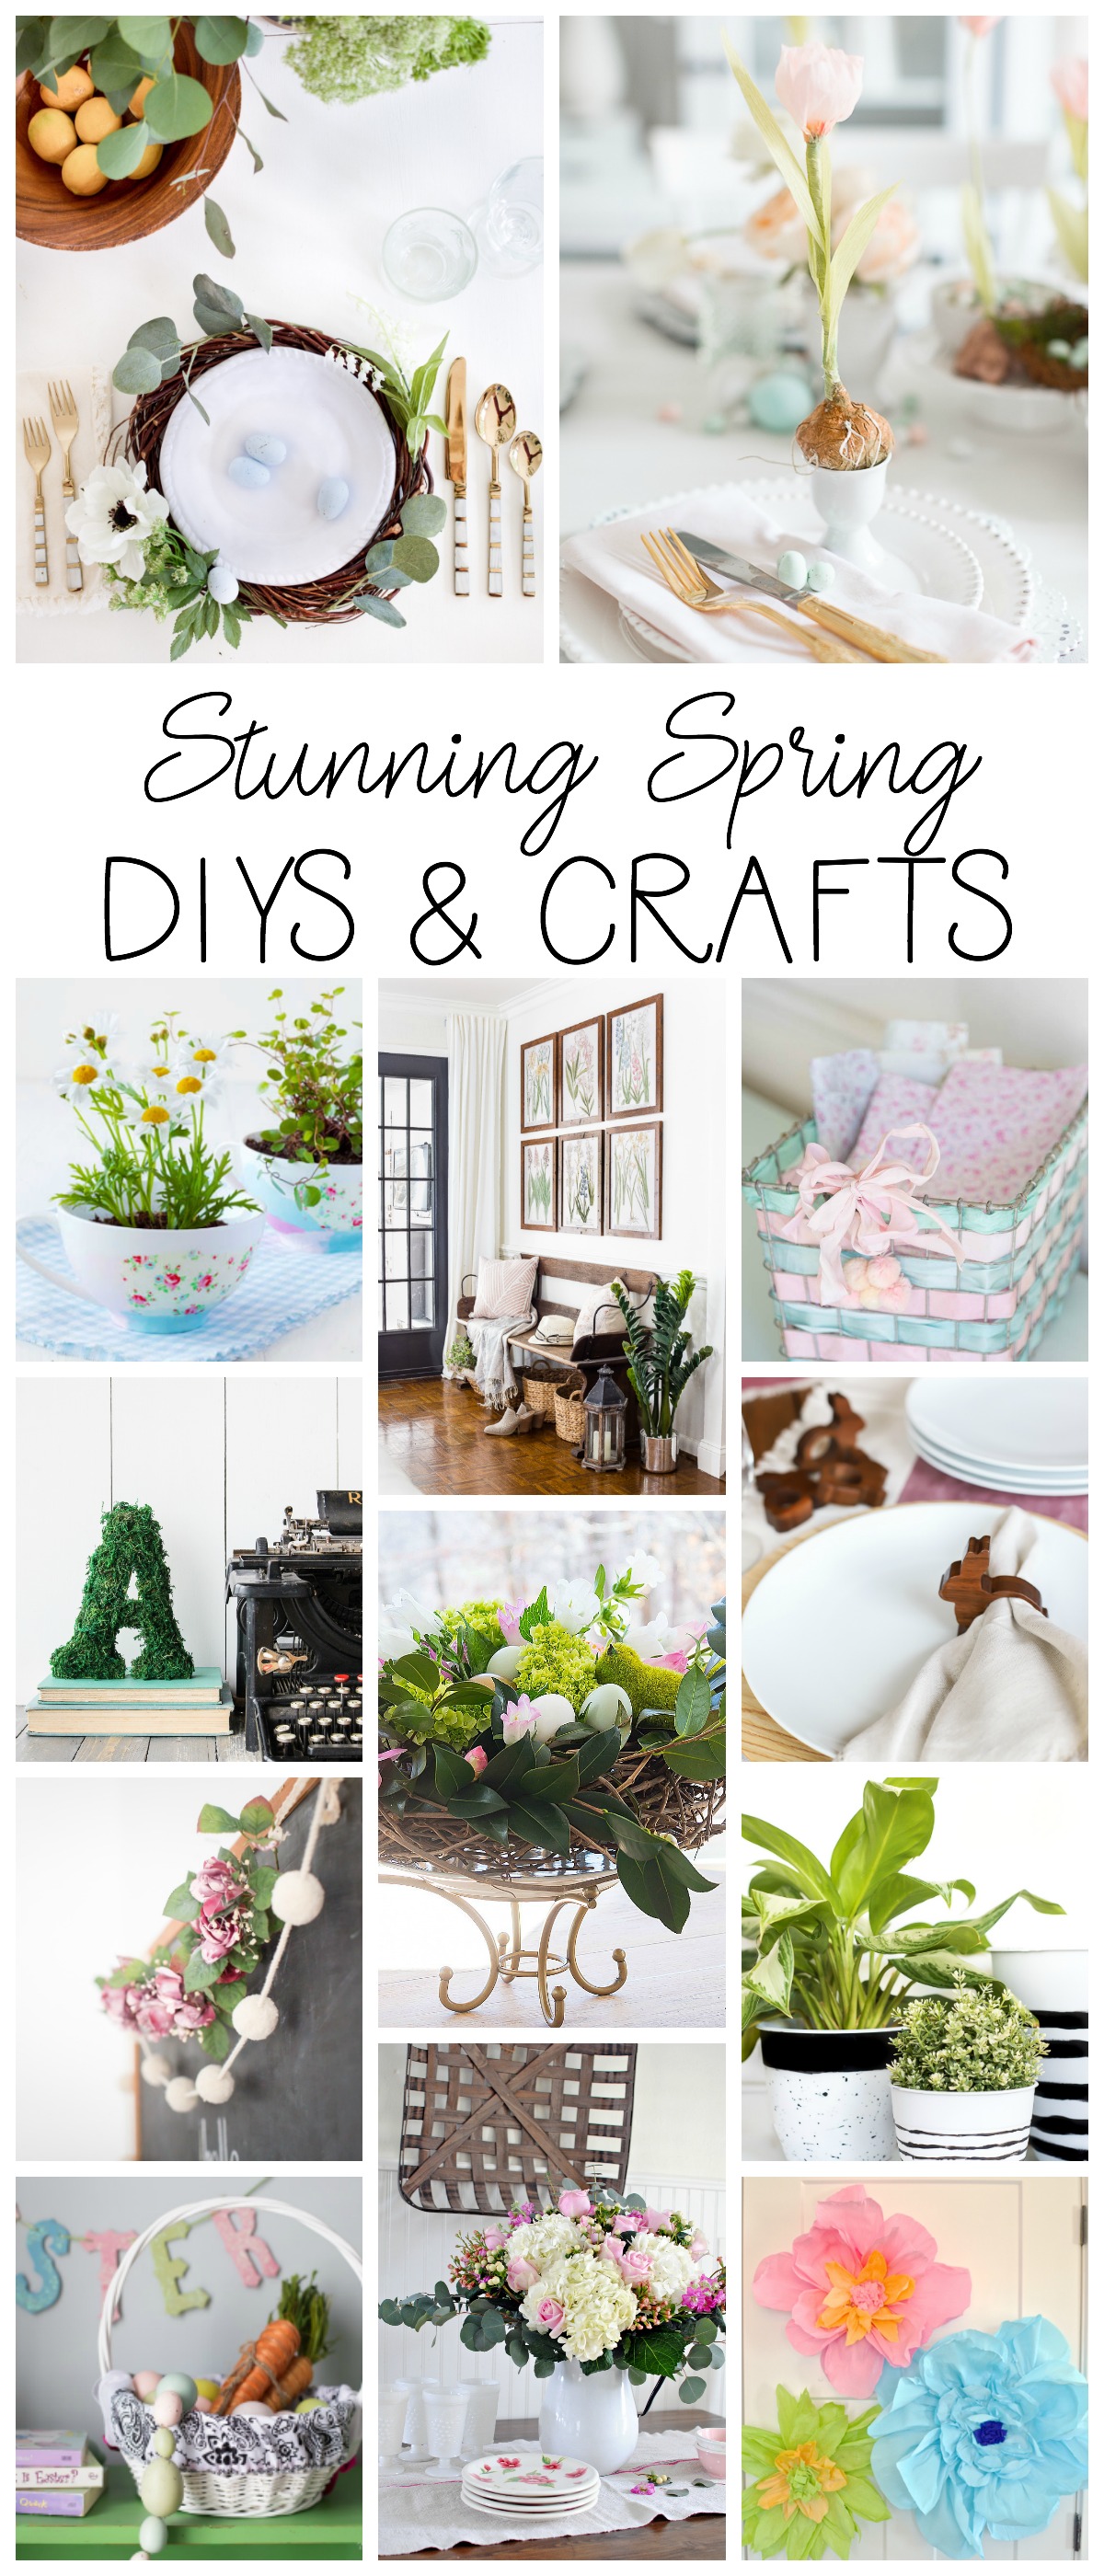 Stunning Spring DIYS & Crafts poster.